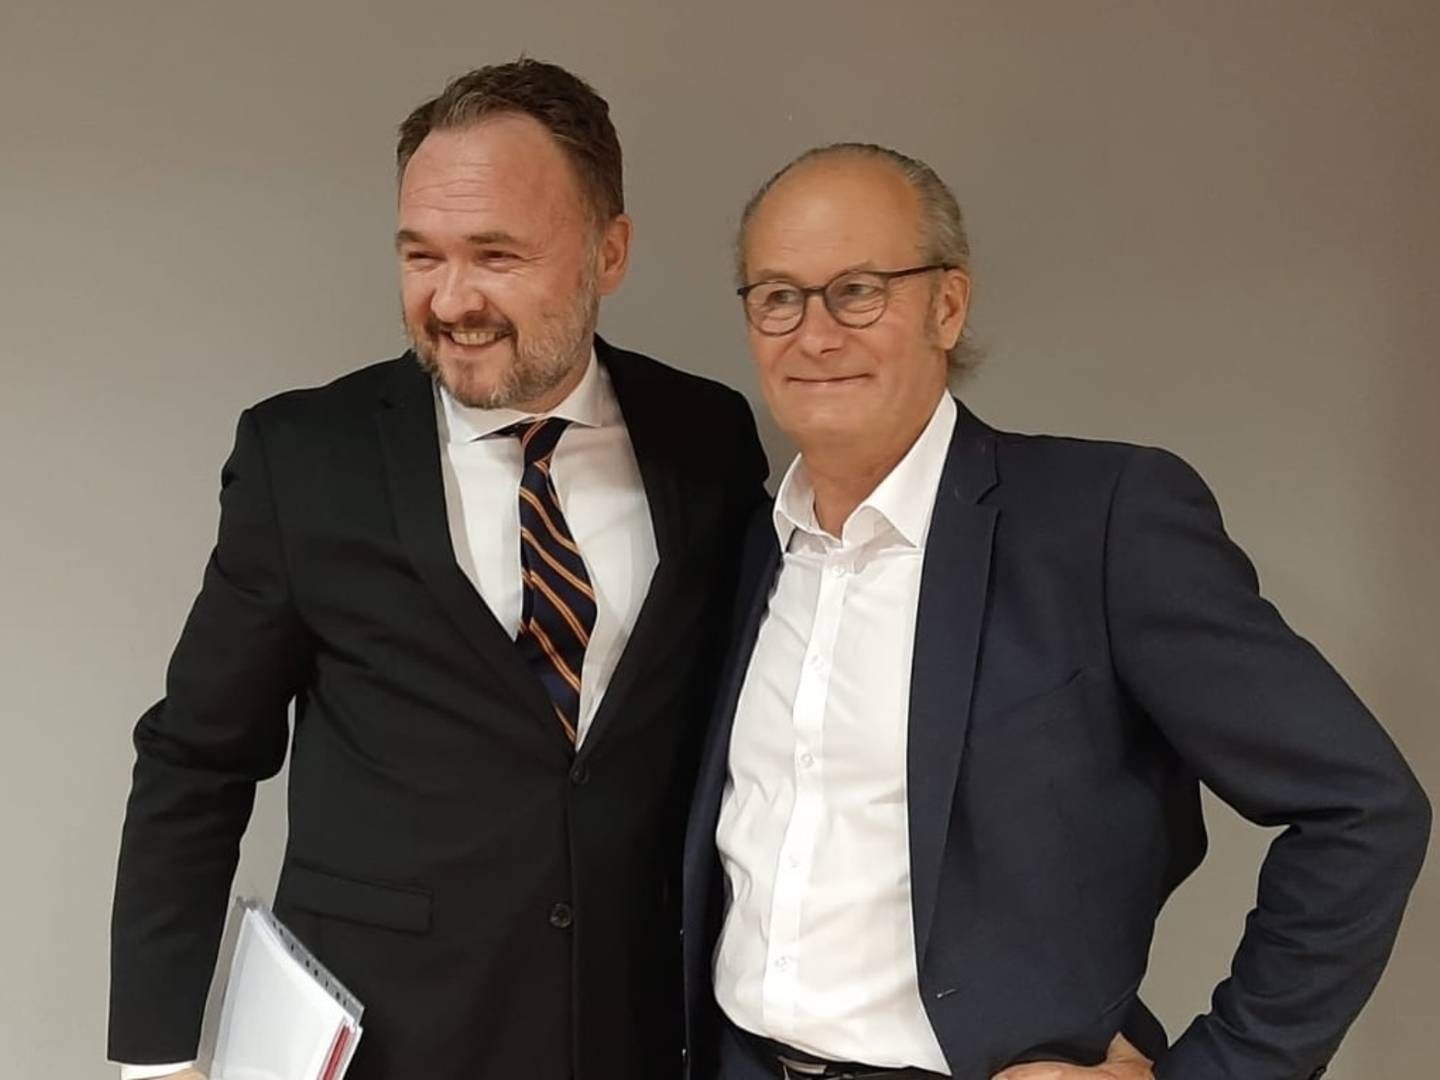 Danmarks energiminister Dan Jørgensen med sin kollega fra Luxembourg, Claude Turmes. | Foto: Le Gouvernement Luxembourgeois